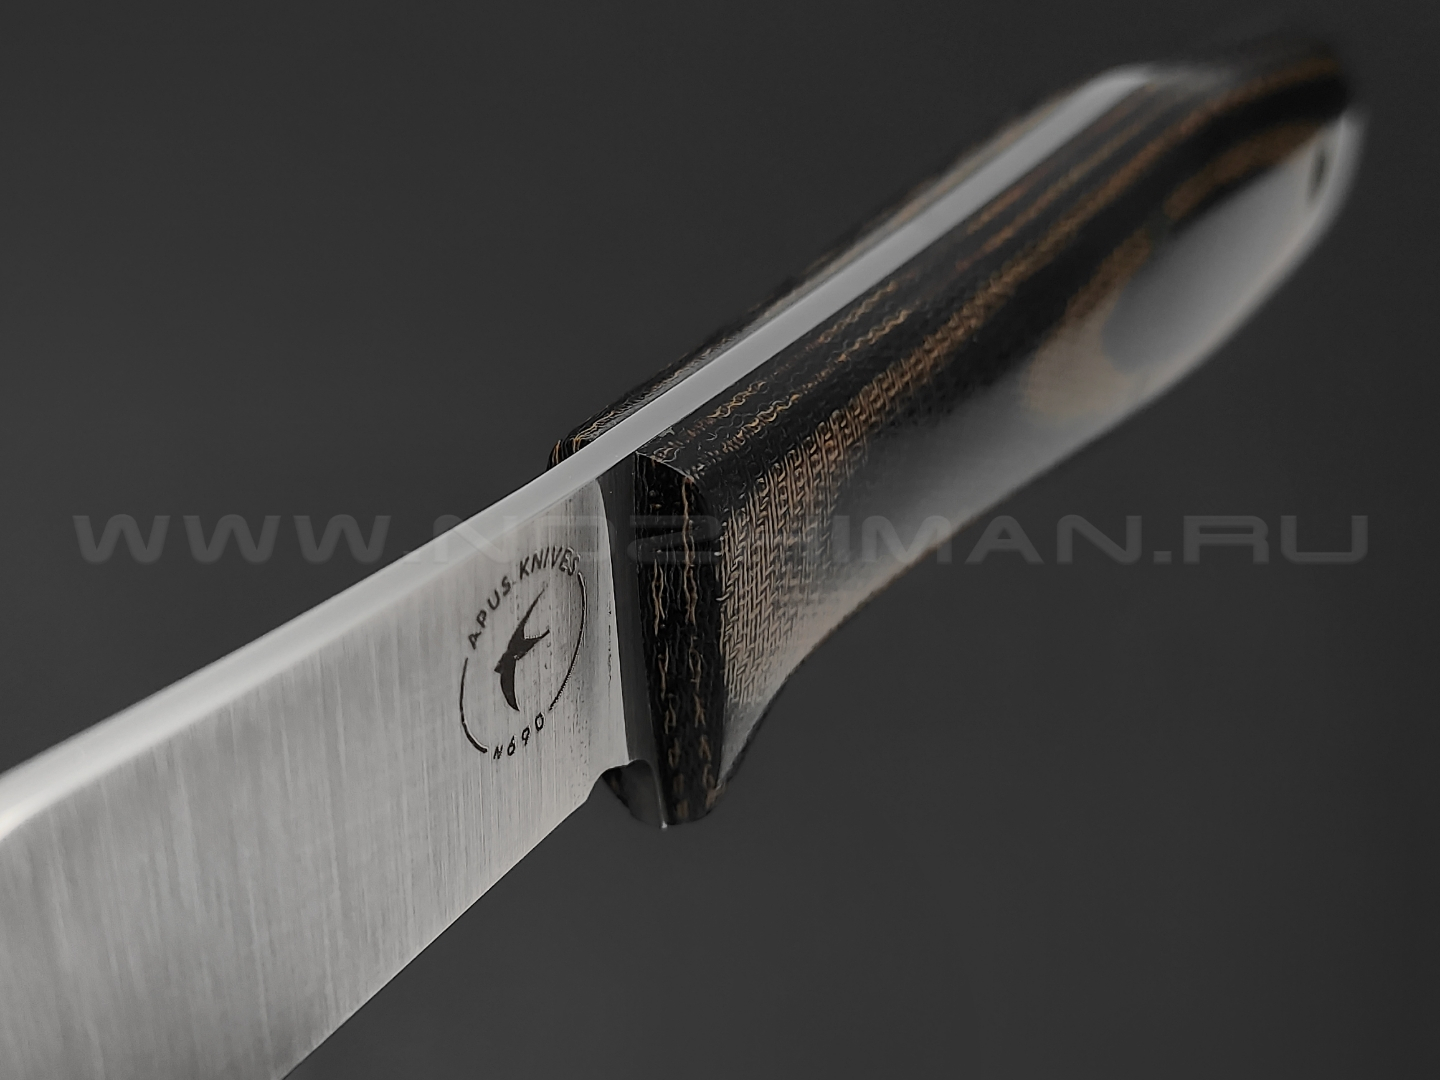 Apus Knives нож Toothpick 2.2 сталь N690, рукоять черно-оливковая микарта